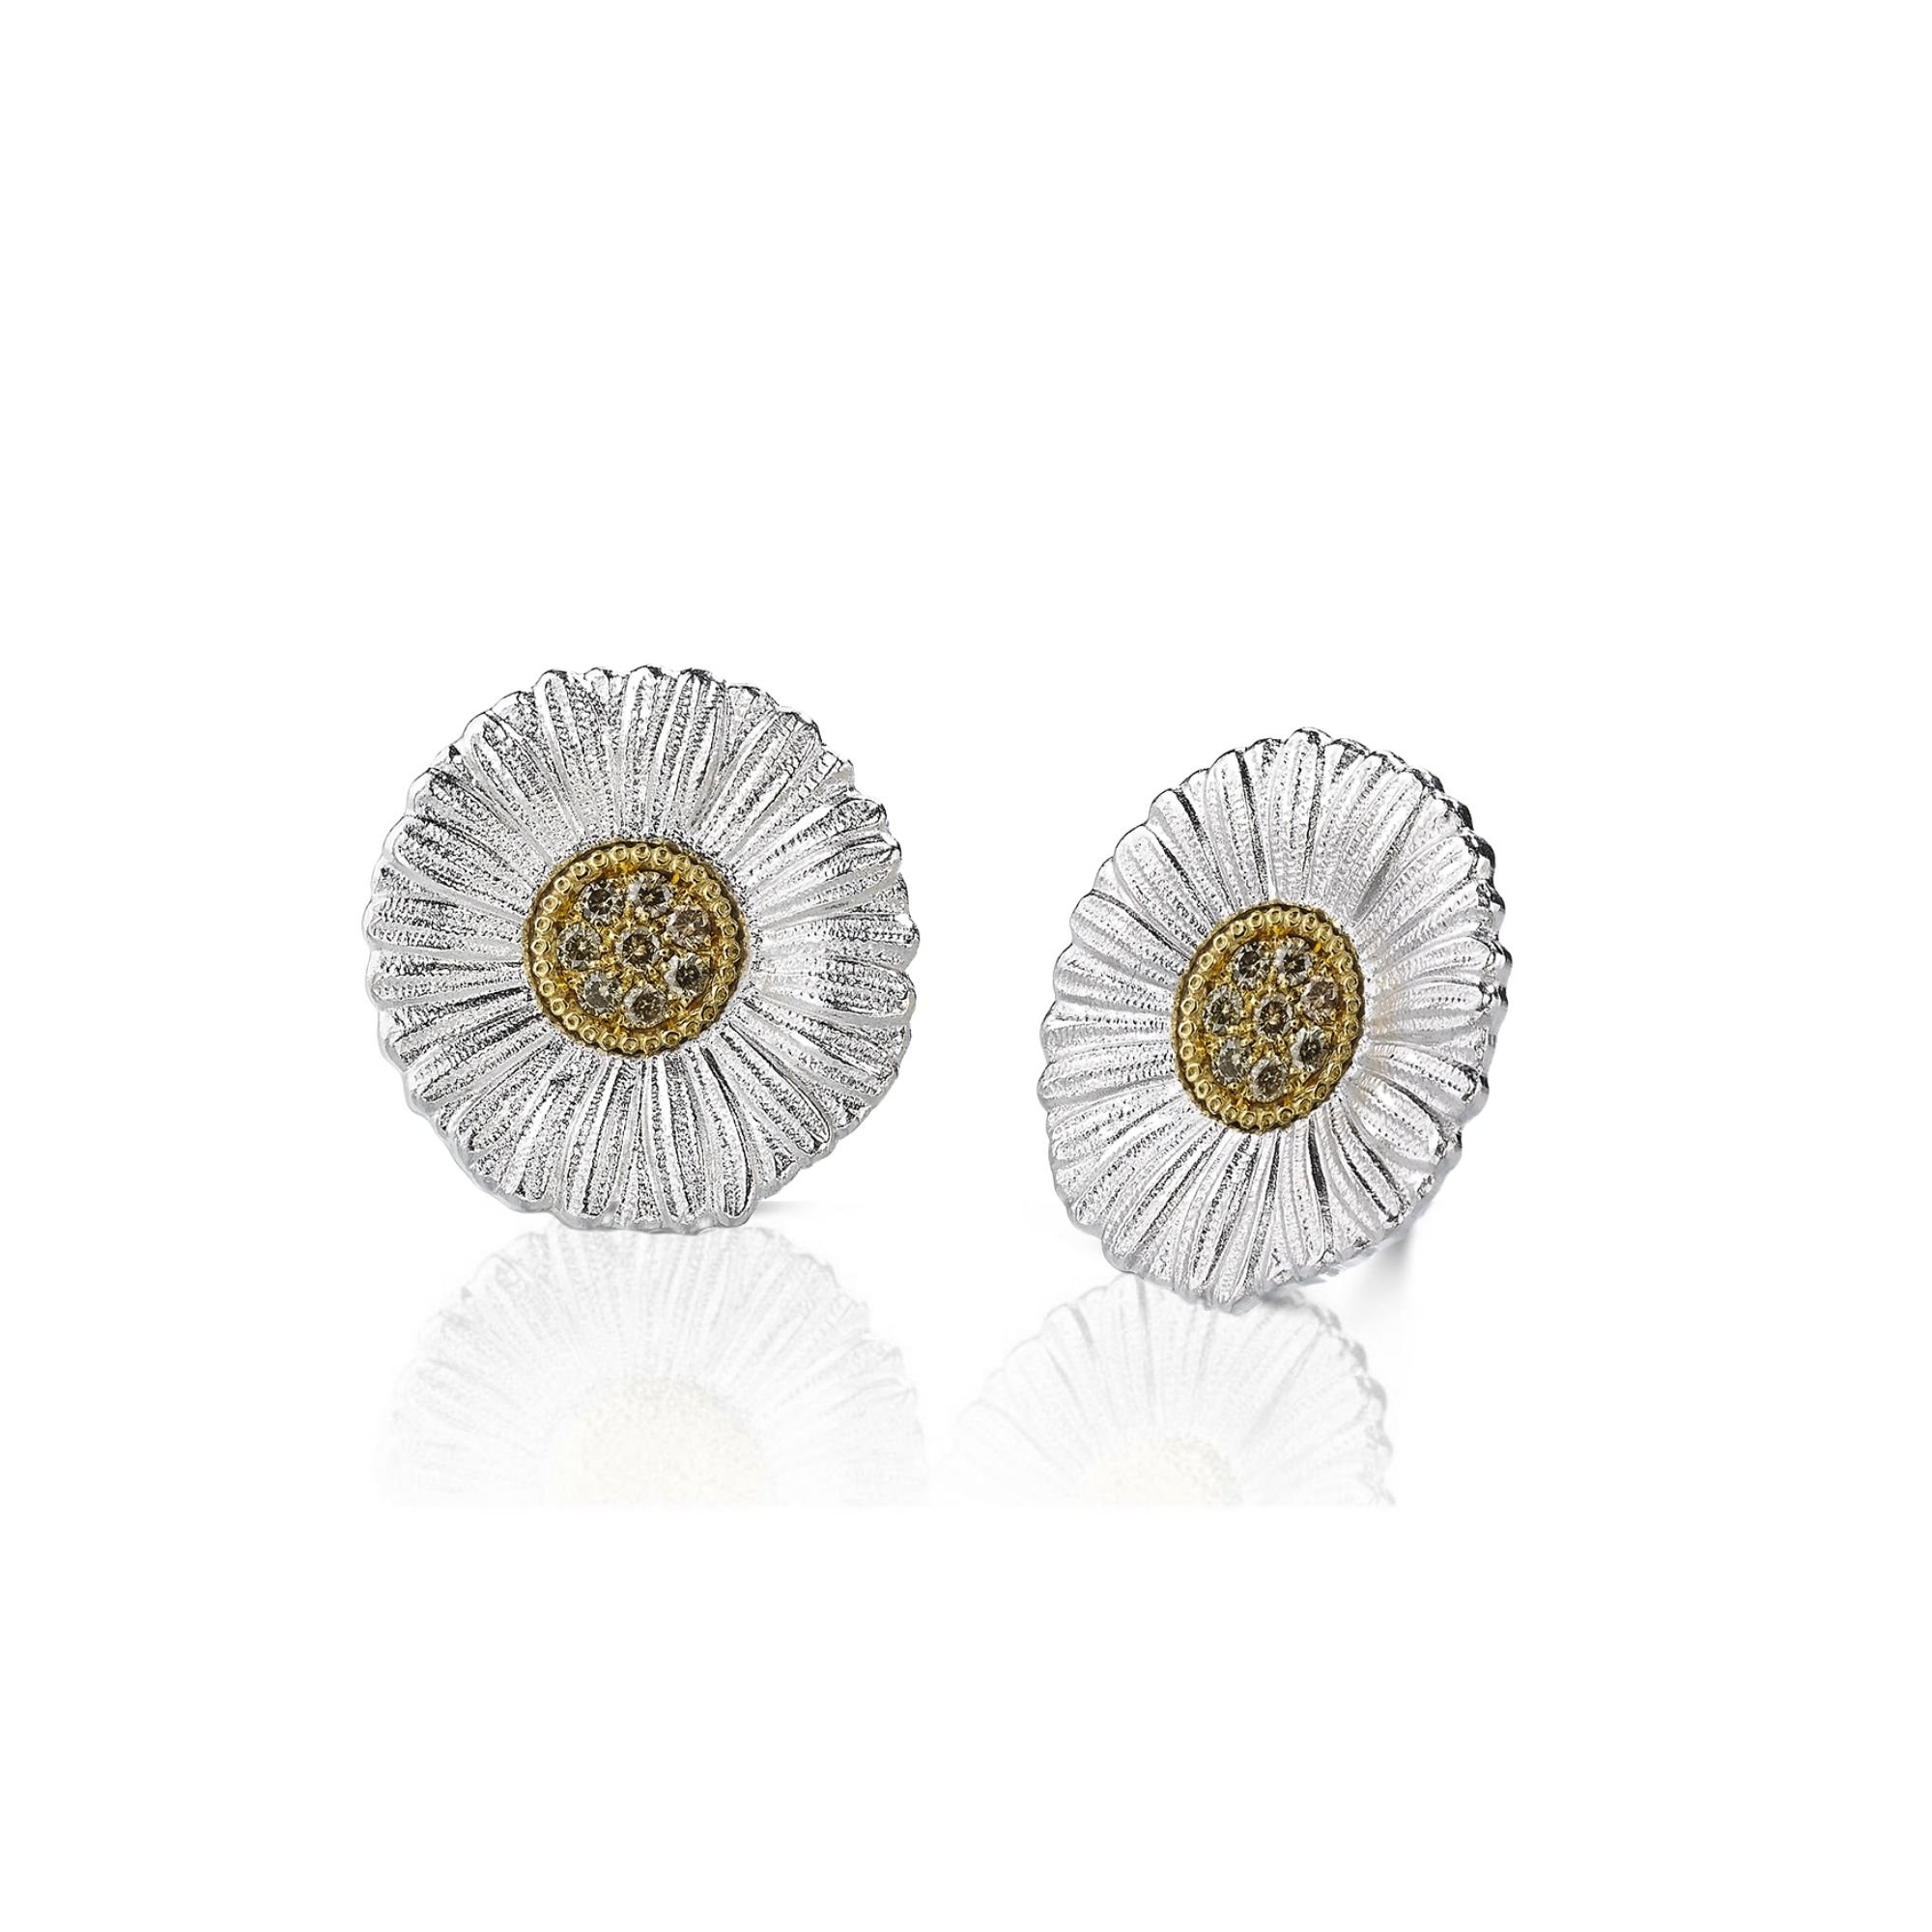 orecchini buccellati daisy earrings jagear012313 buccellati earrings blossom diamond sconto discount